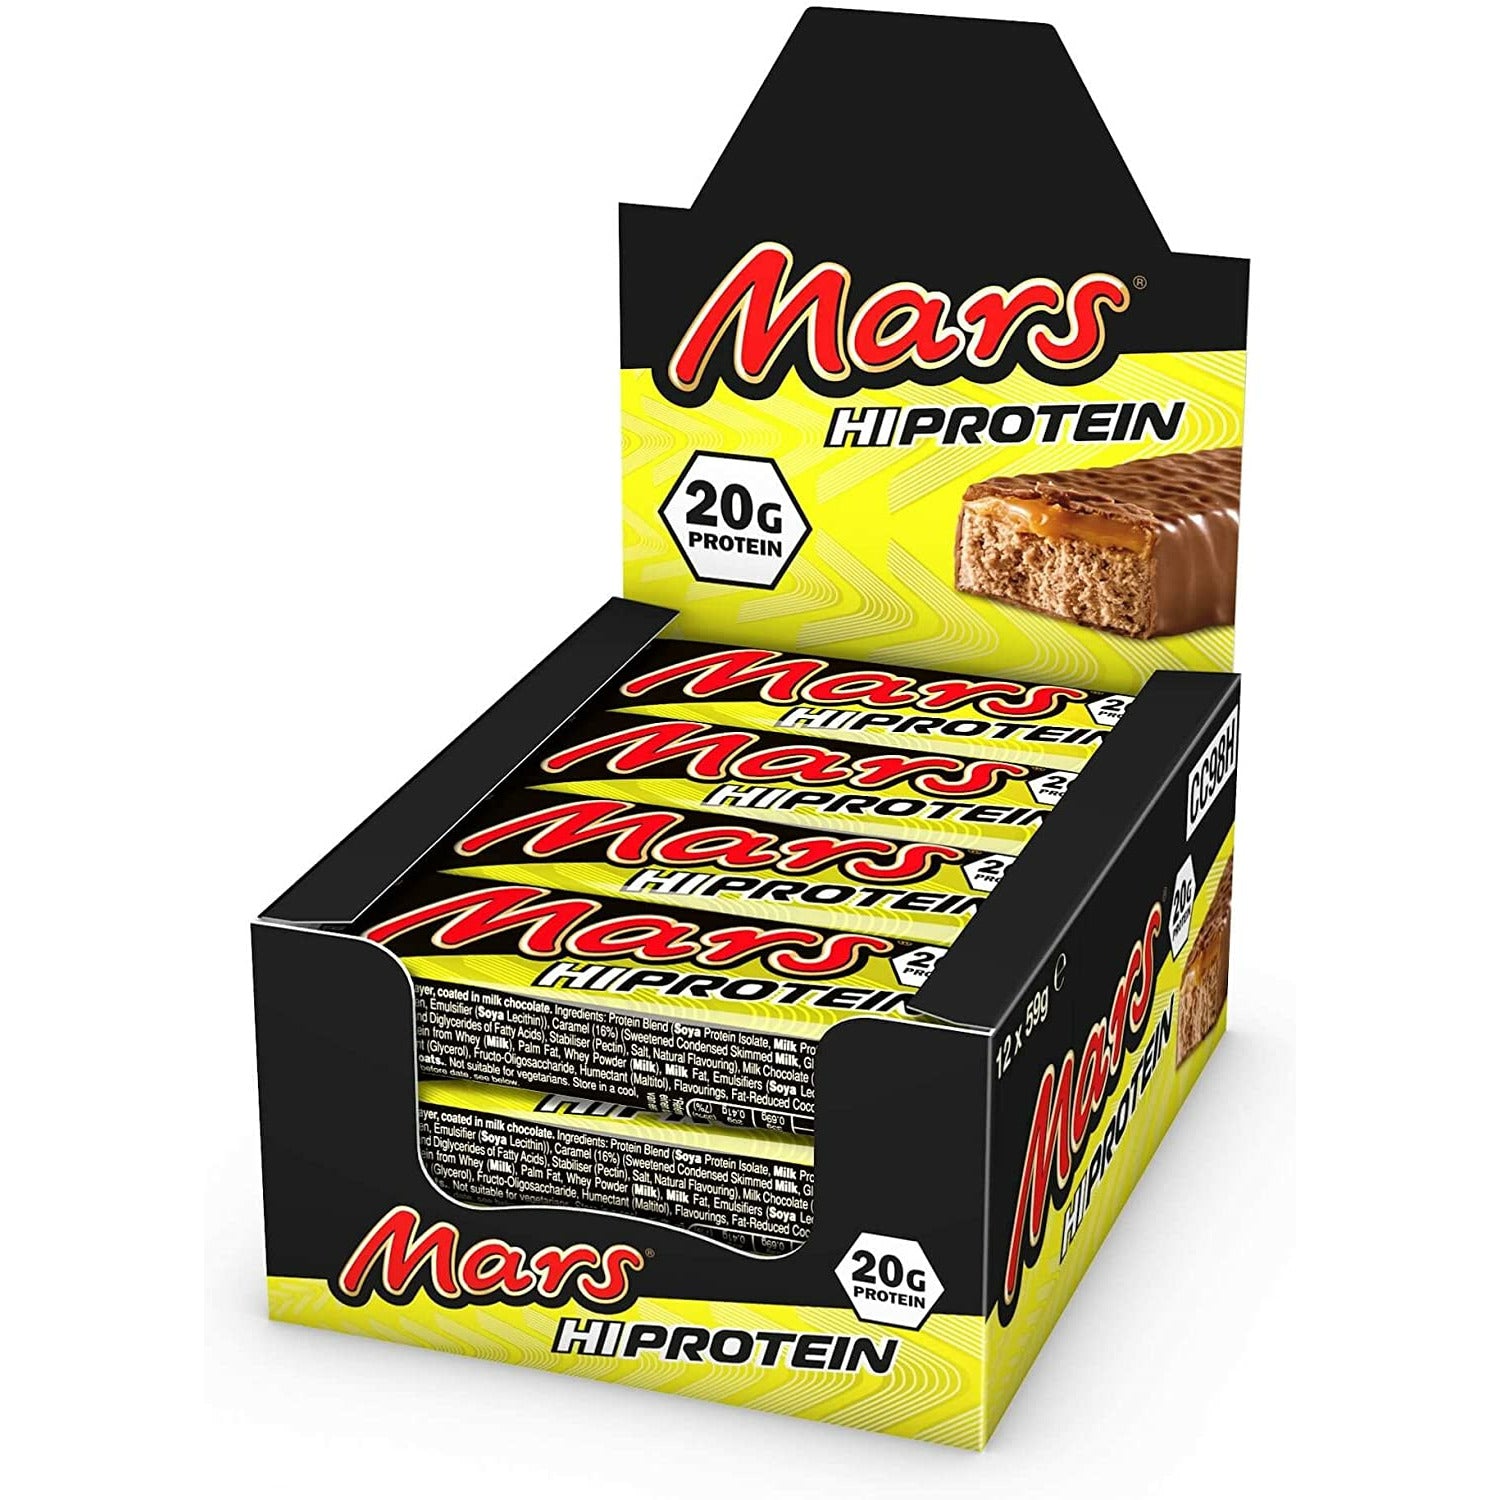 Mars Brand Hi-Protein Bar 1 BOX of 12 Mars Brand Top Nutrition Canada